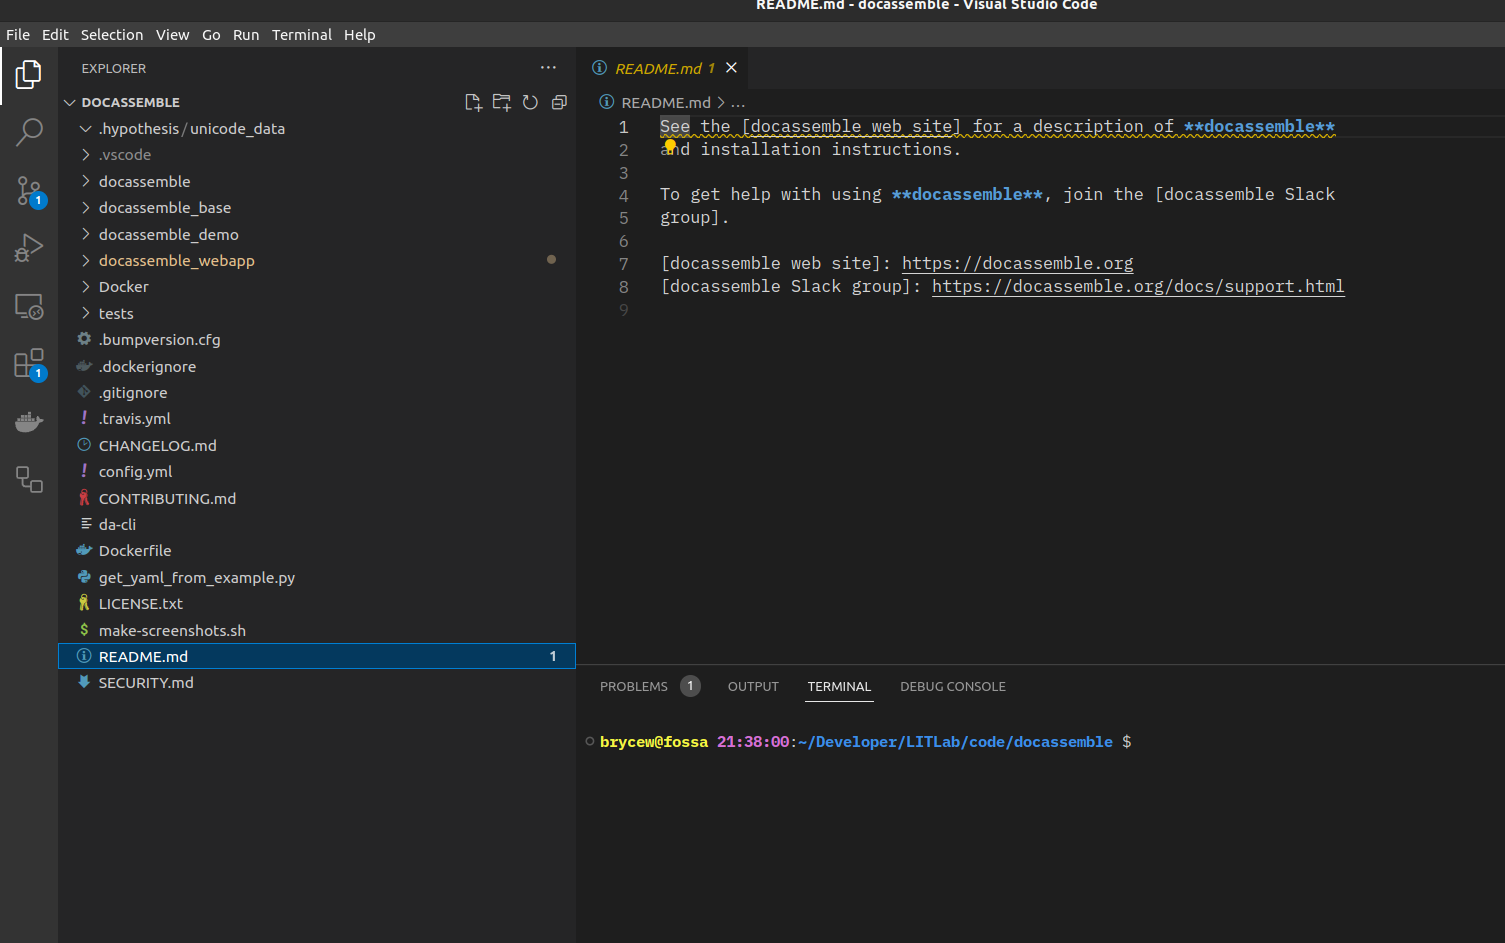 A screenshot of visual studio code editor